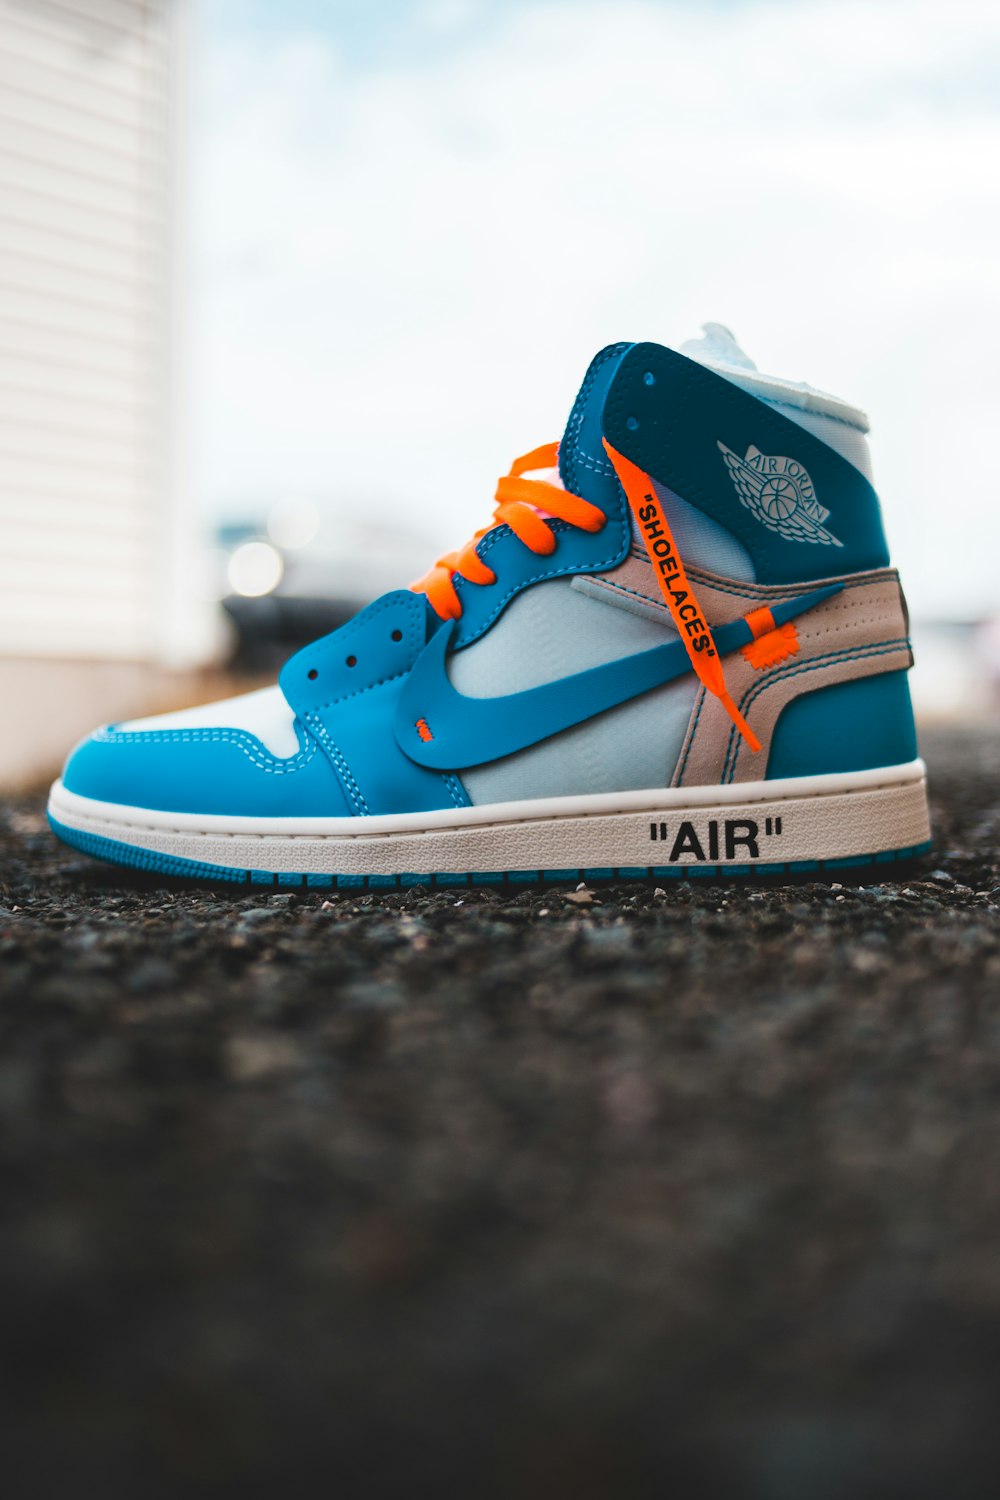 Blue and orange nike high top sneakers photo – Free Footwear Image on  Unsplash